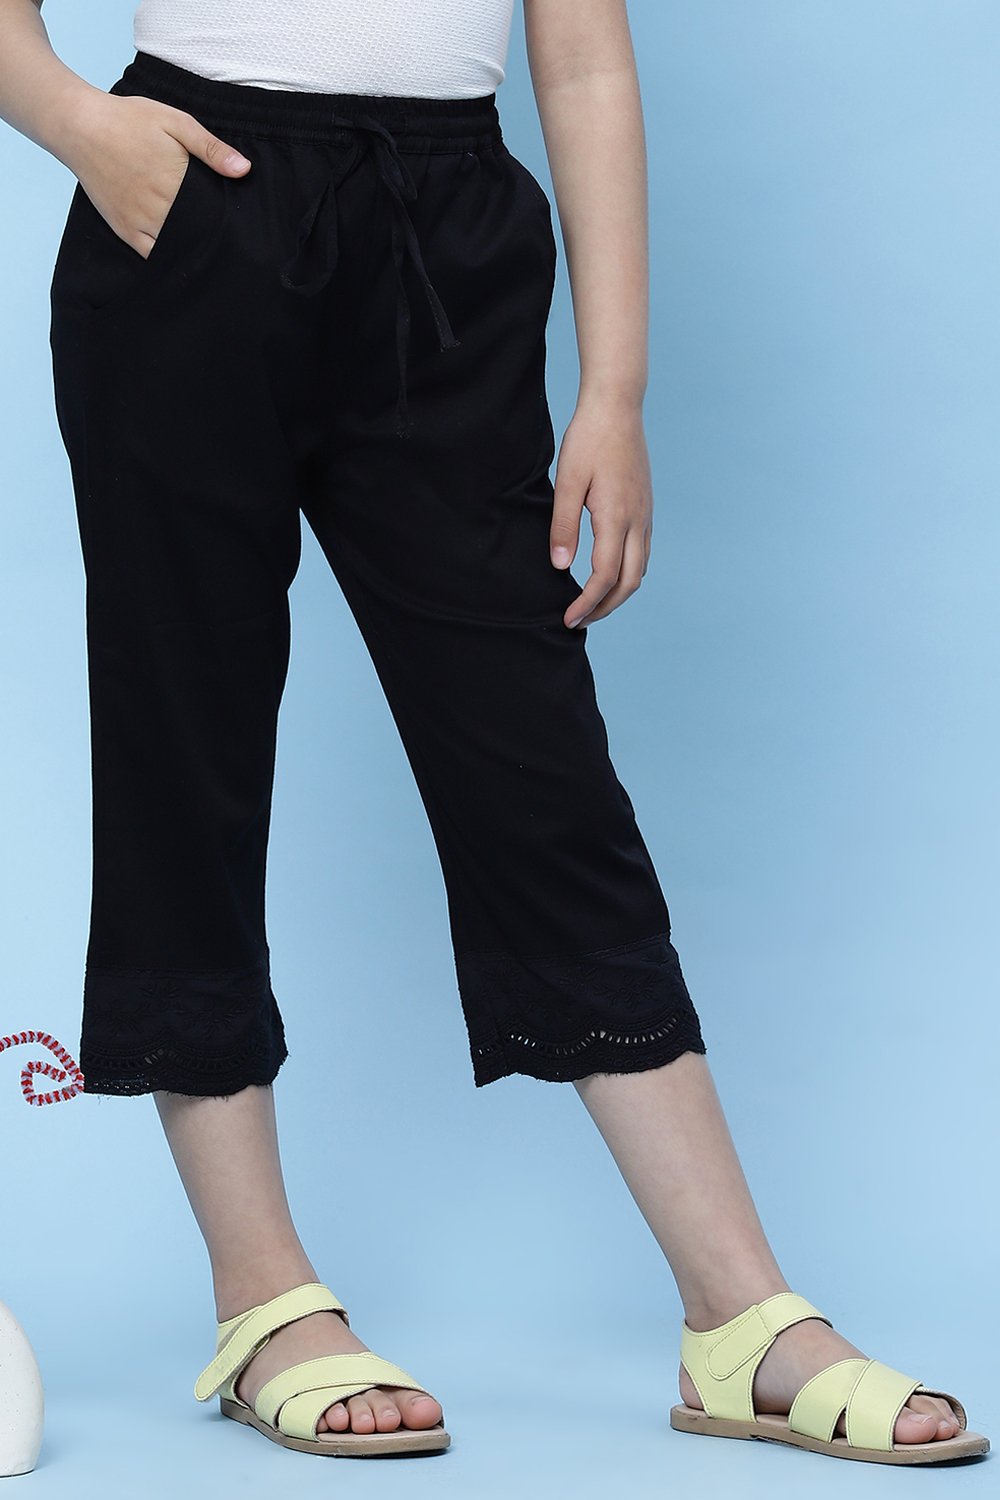 Buy Black Cotton Solid Capri Pant (Capri) for INR399.50